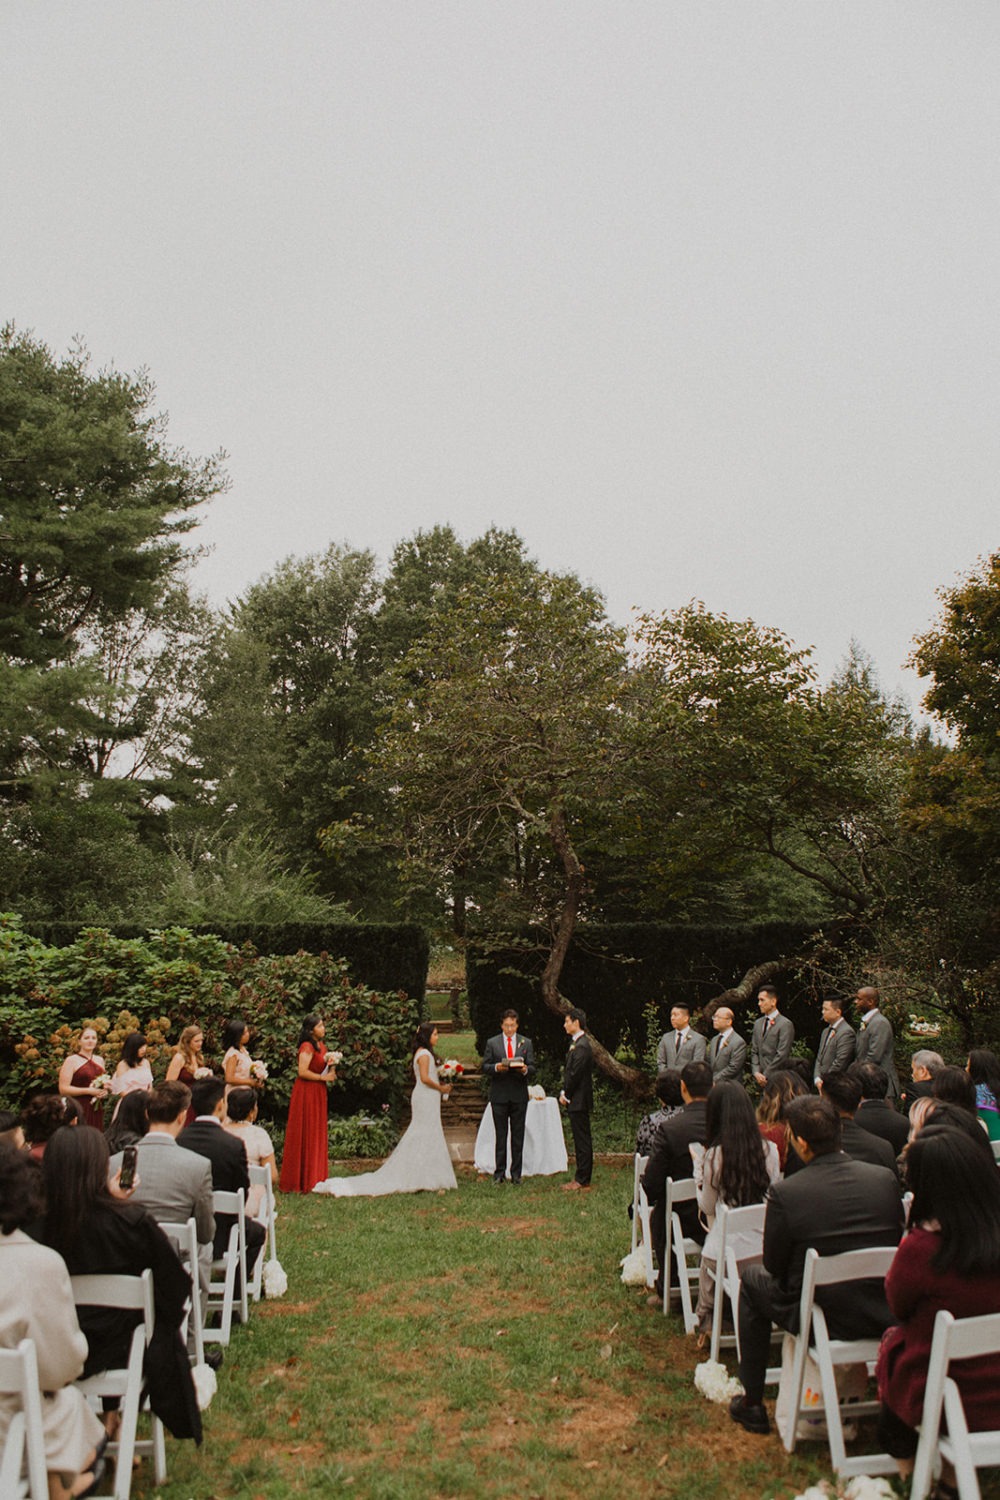 Couple exchanges vows at Virginia outdoor wedding.